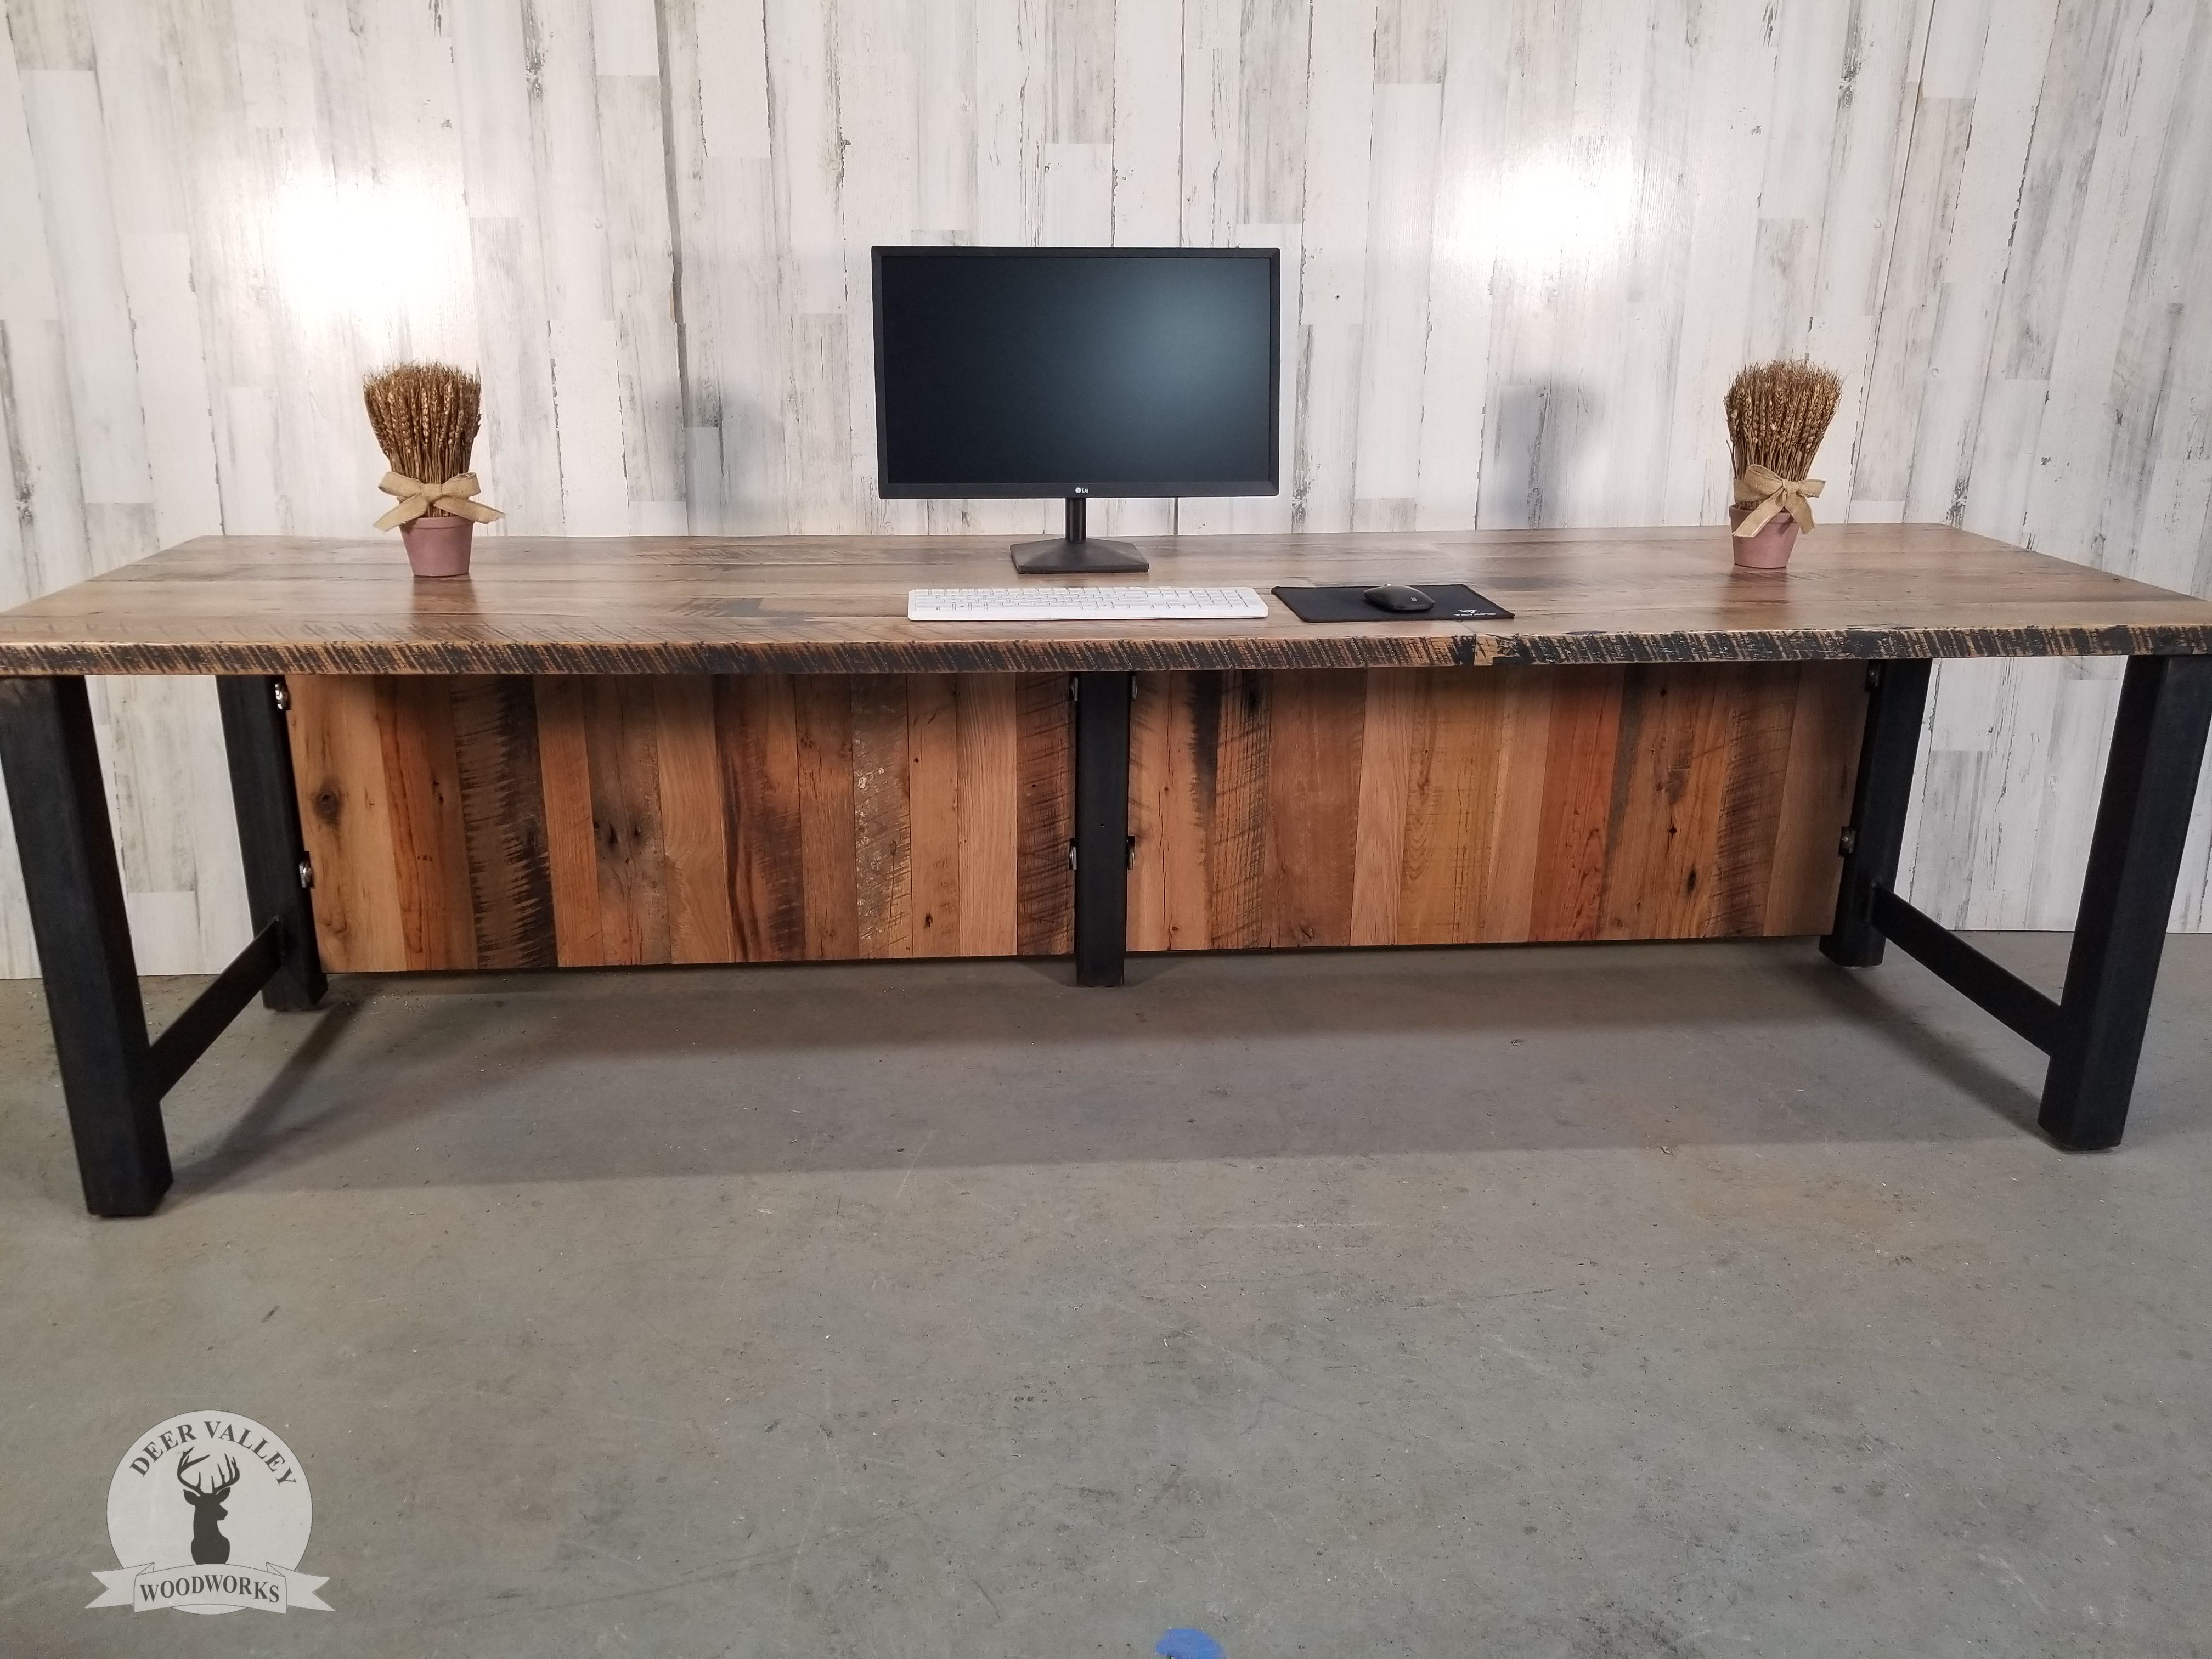 Buy Handmade Reclaimed Wood Office Desk, Barnwood Computer Desk, Rustic Desk,  made to order from Deer Valley Woodworks 